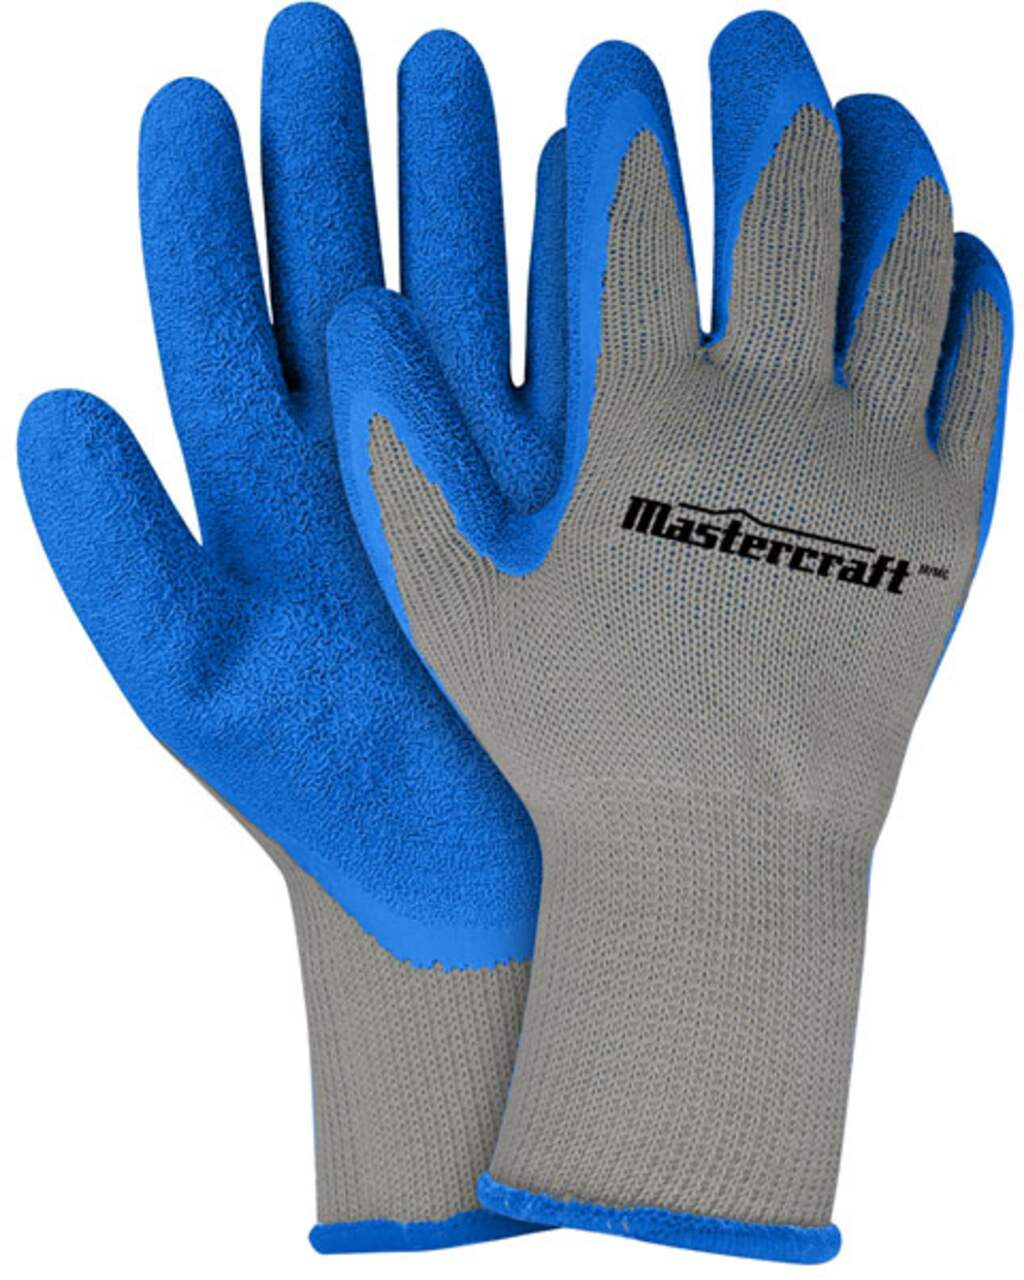 Mastercraft Latex Elastic Cuff Glove, White/Blue, Assorted Sizes